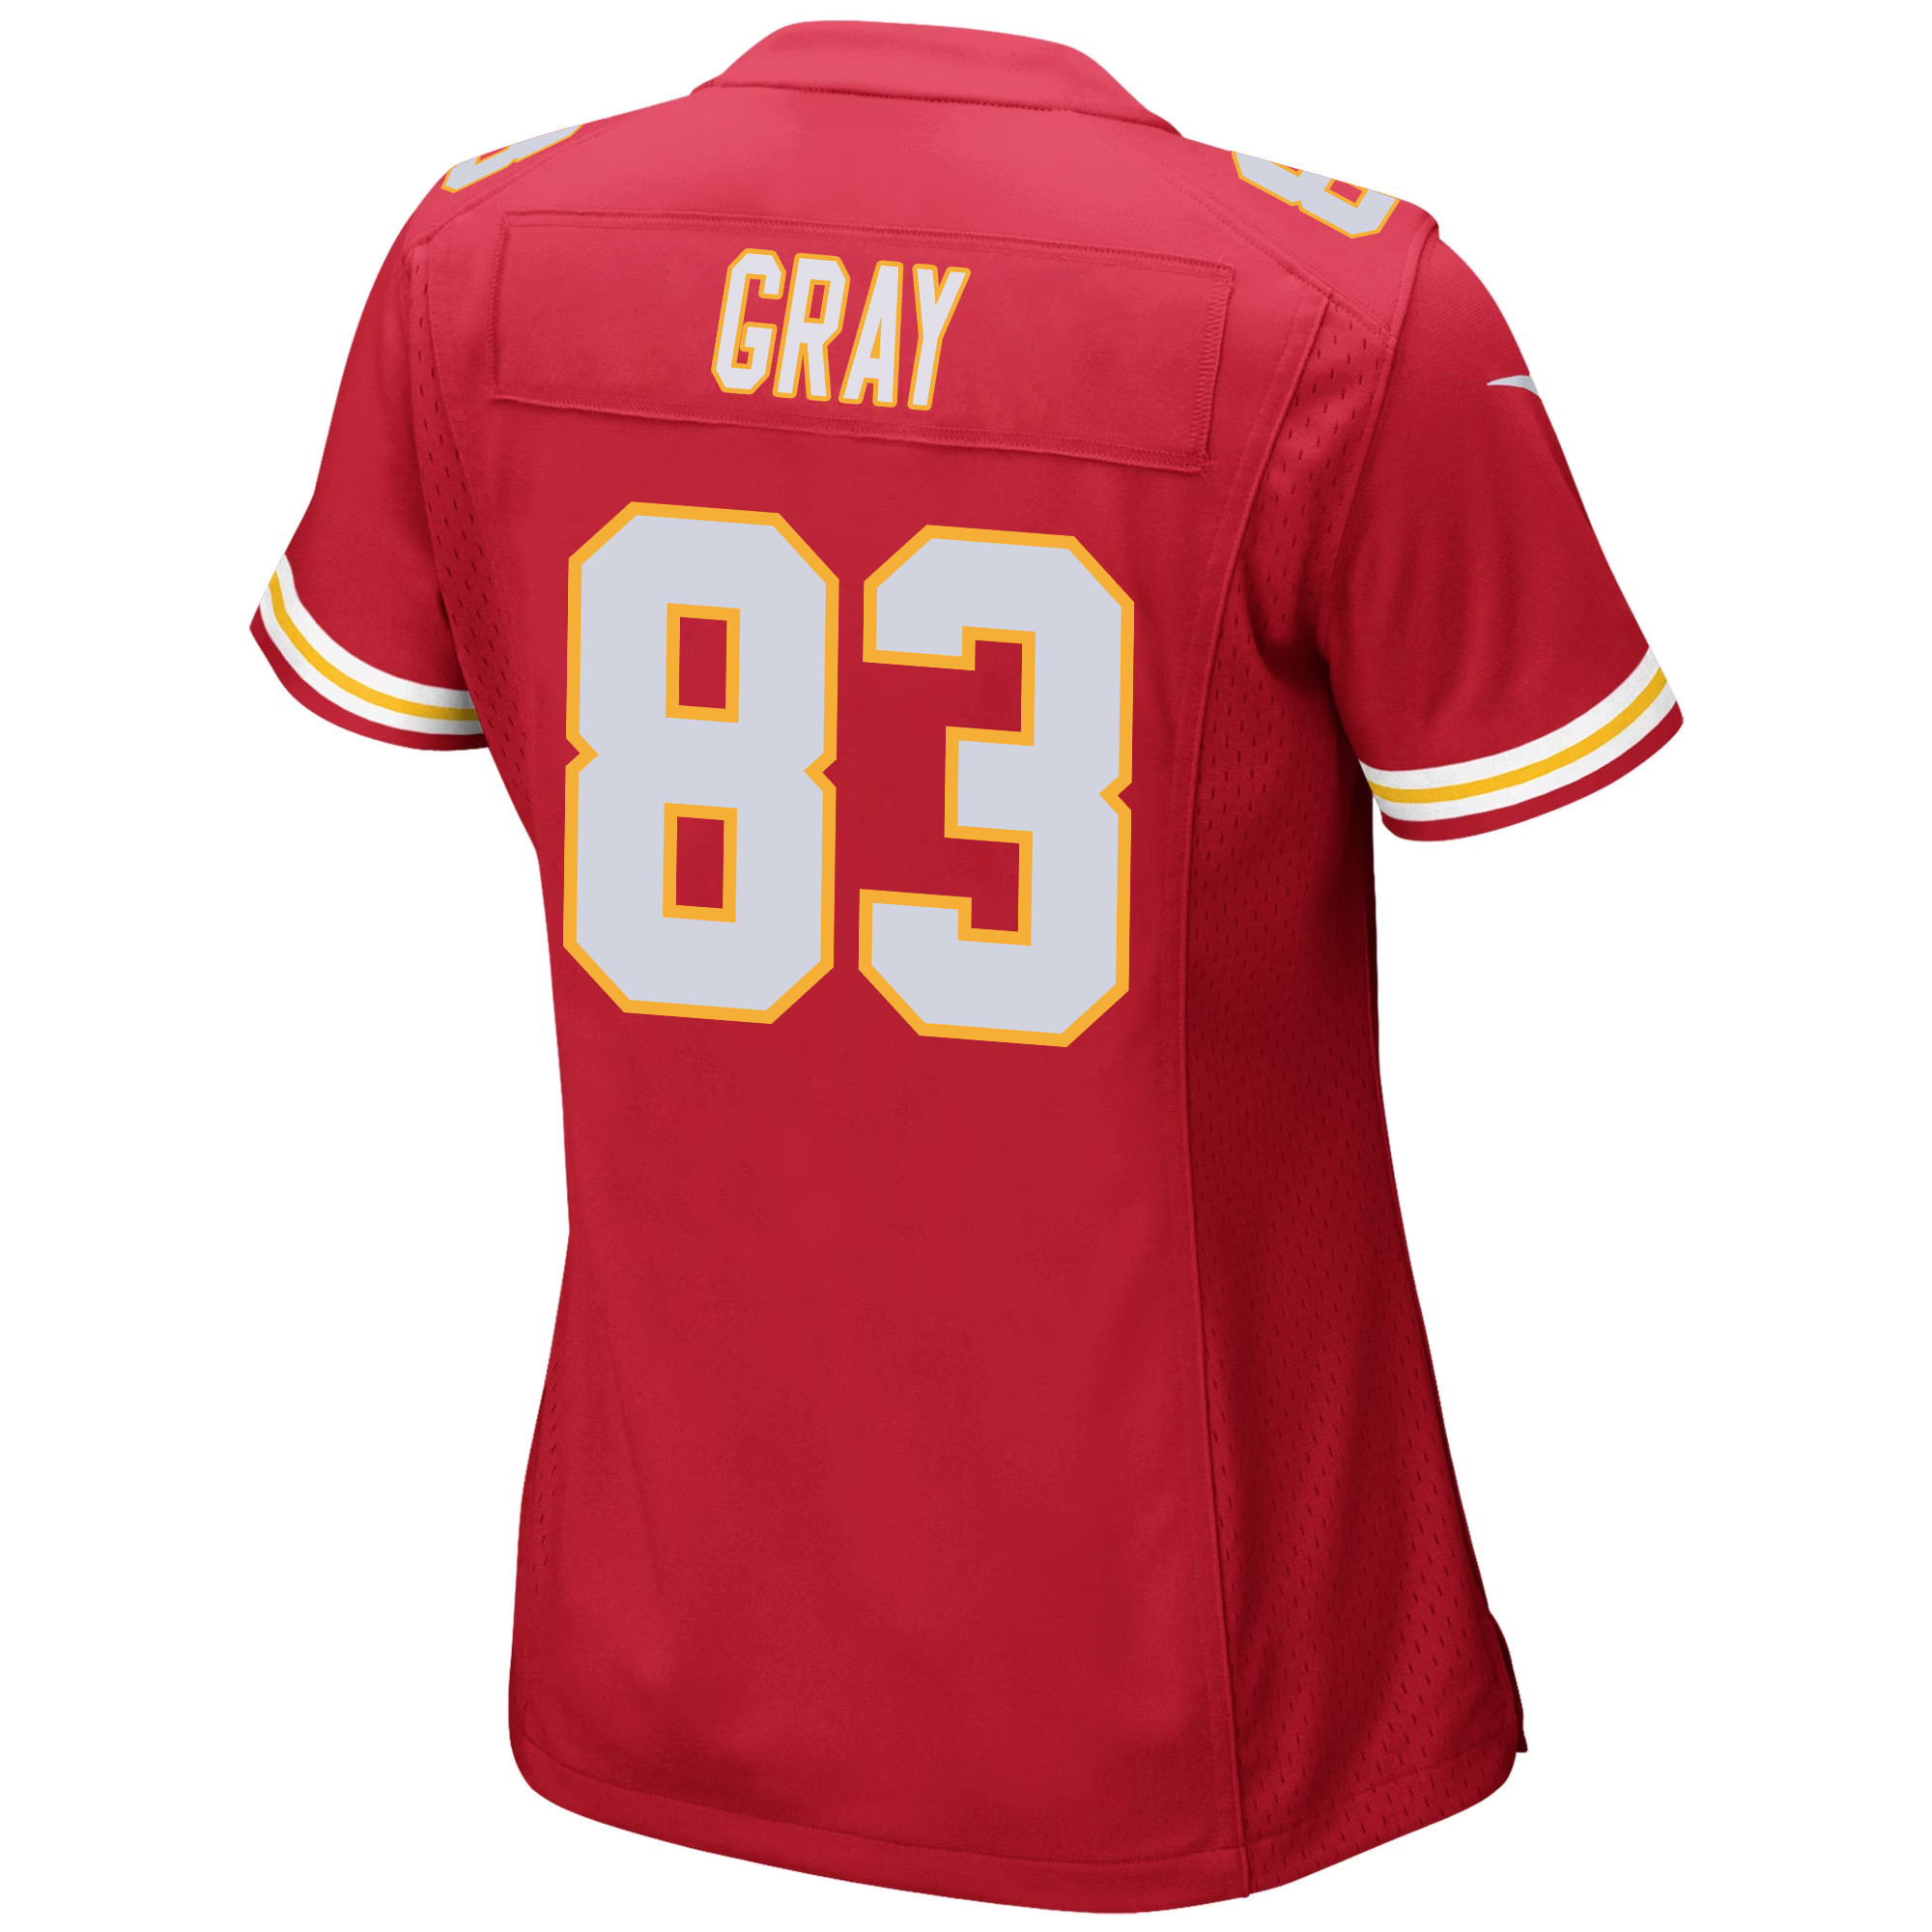 Noah Gray 83 Kansas City Chiefs Super Bowl LVIII Champions 4X Game Women Jersey - Red